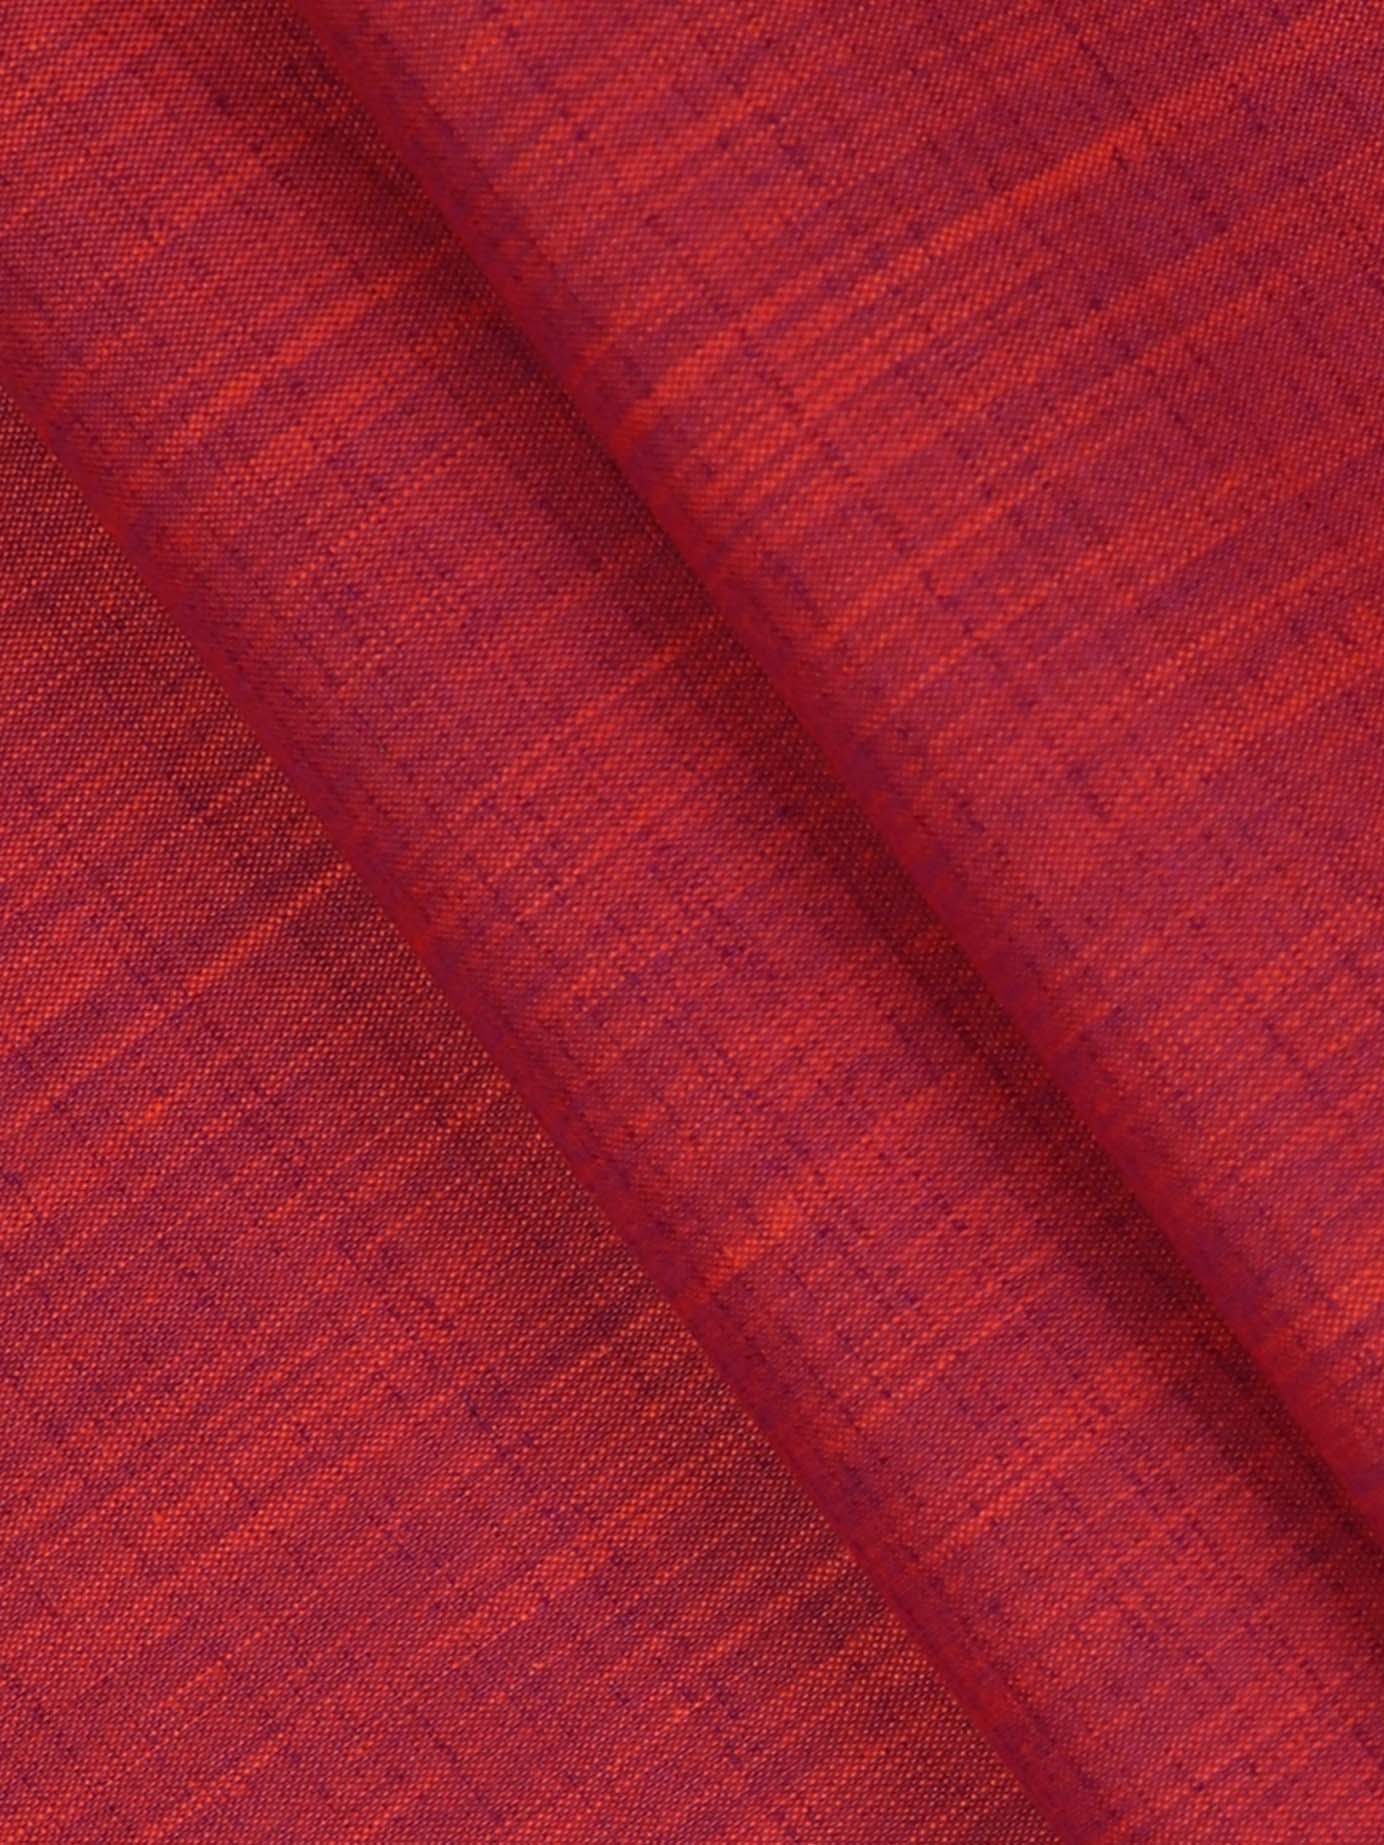 Cotton Mixed Plain Shirt Fabric Orange & Purple Vaibhav-Pttern view